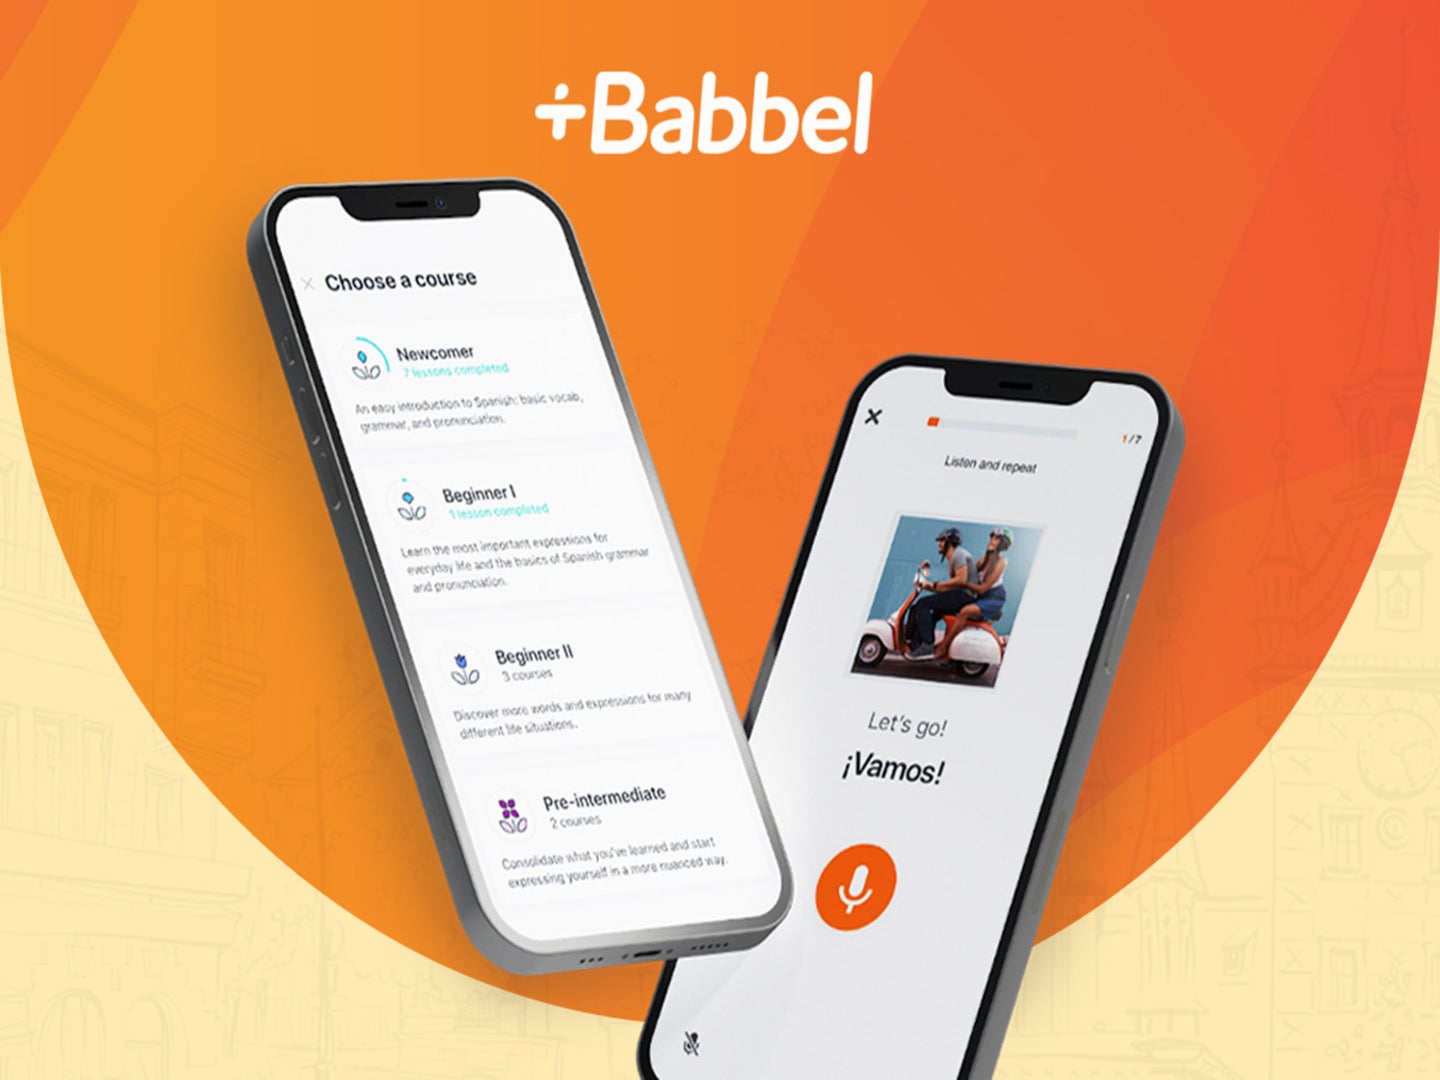 An advertisement for Babbel